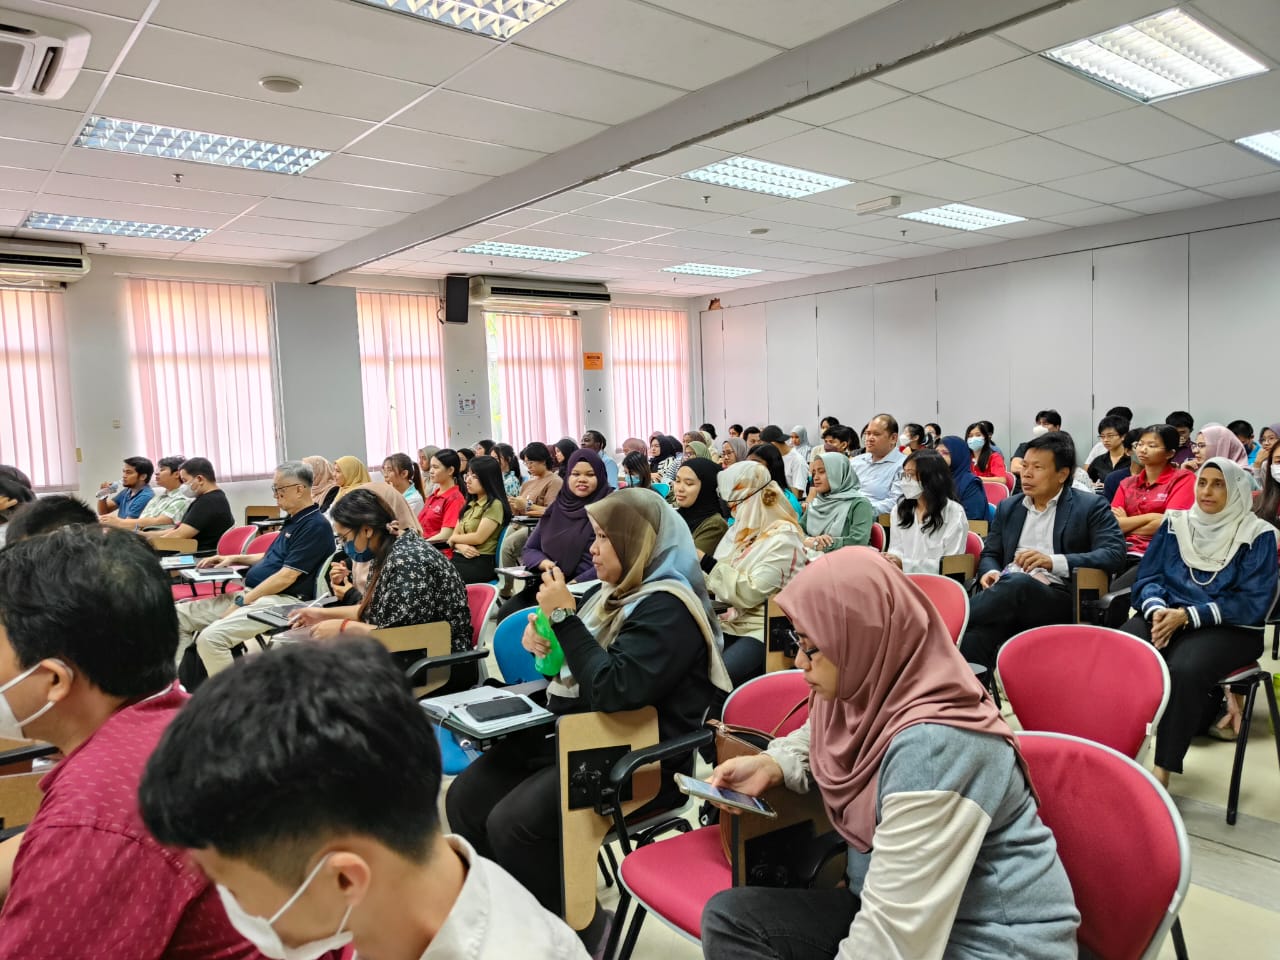 MOU antara Universiti Putra Malaysia dan Delstasia Sdn Bhd